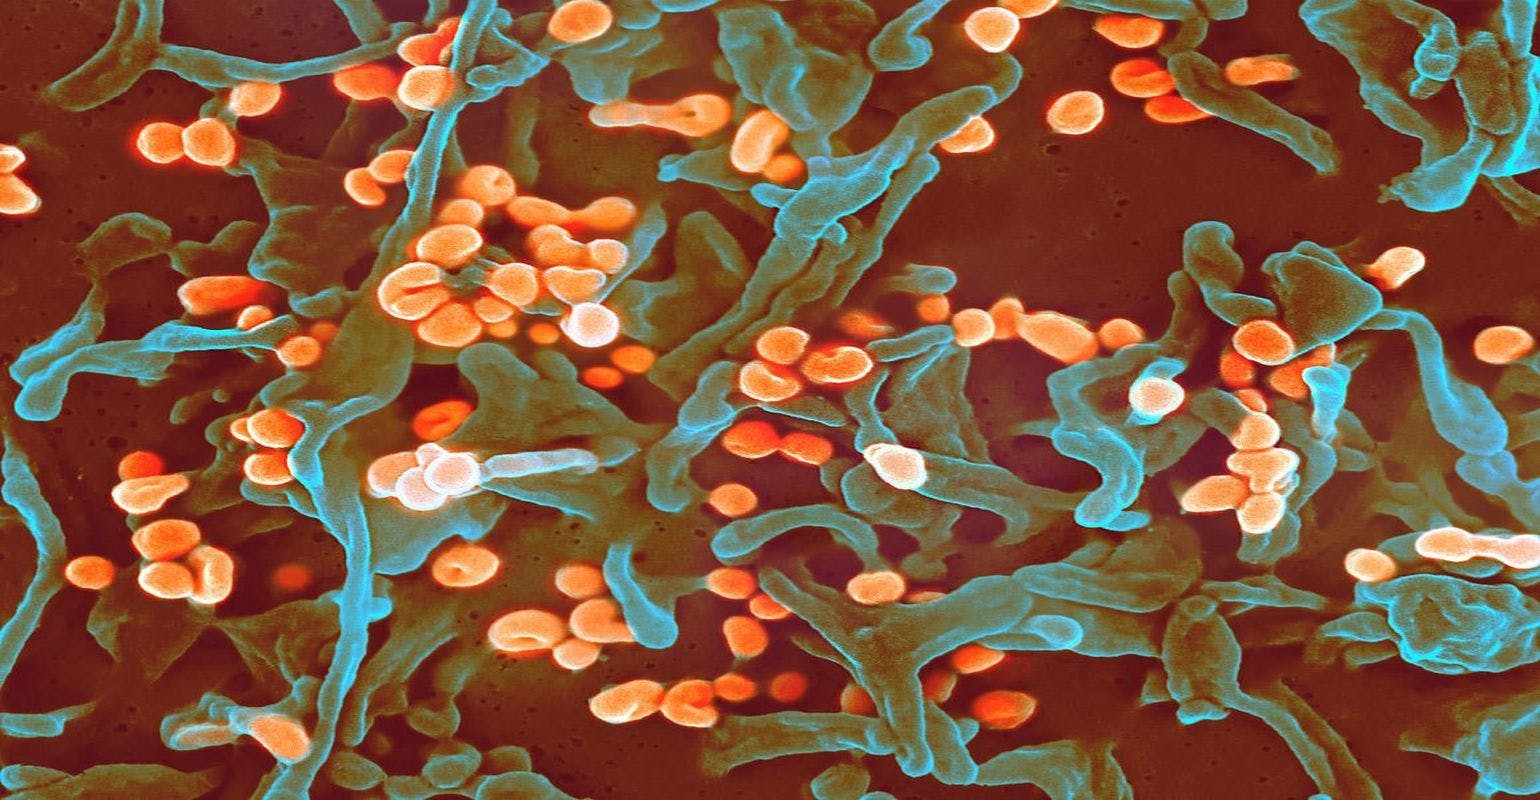 Genomic Analysis Offers Insight Into 2018 Nigeria Lassa Fever Outbreak